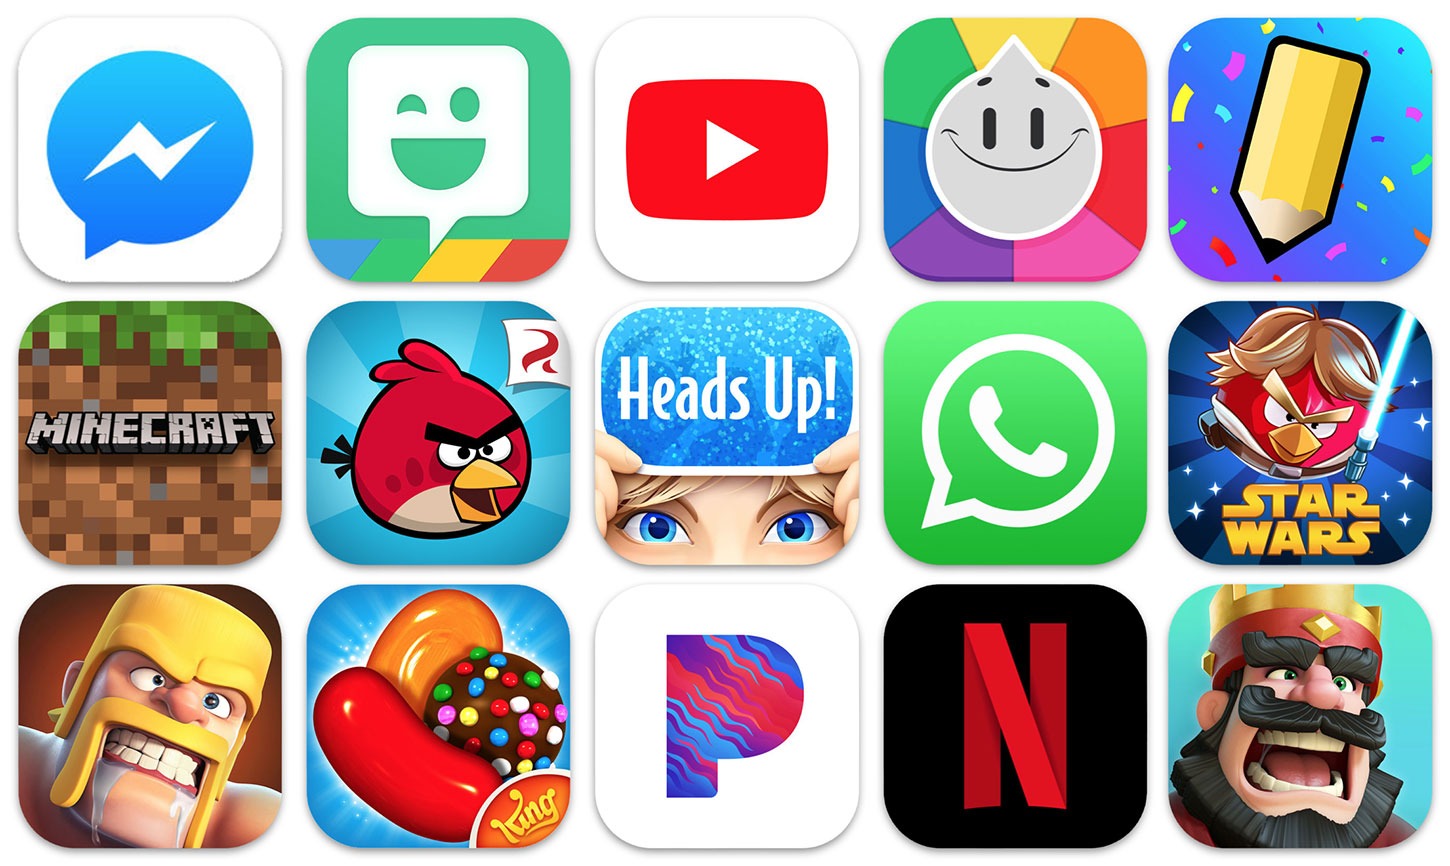 App Store Games